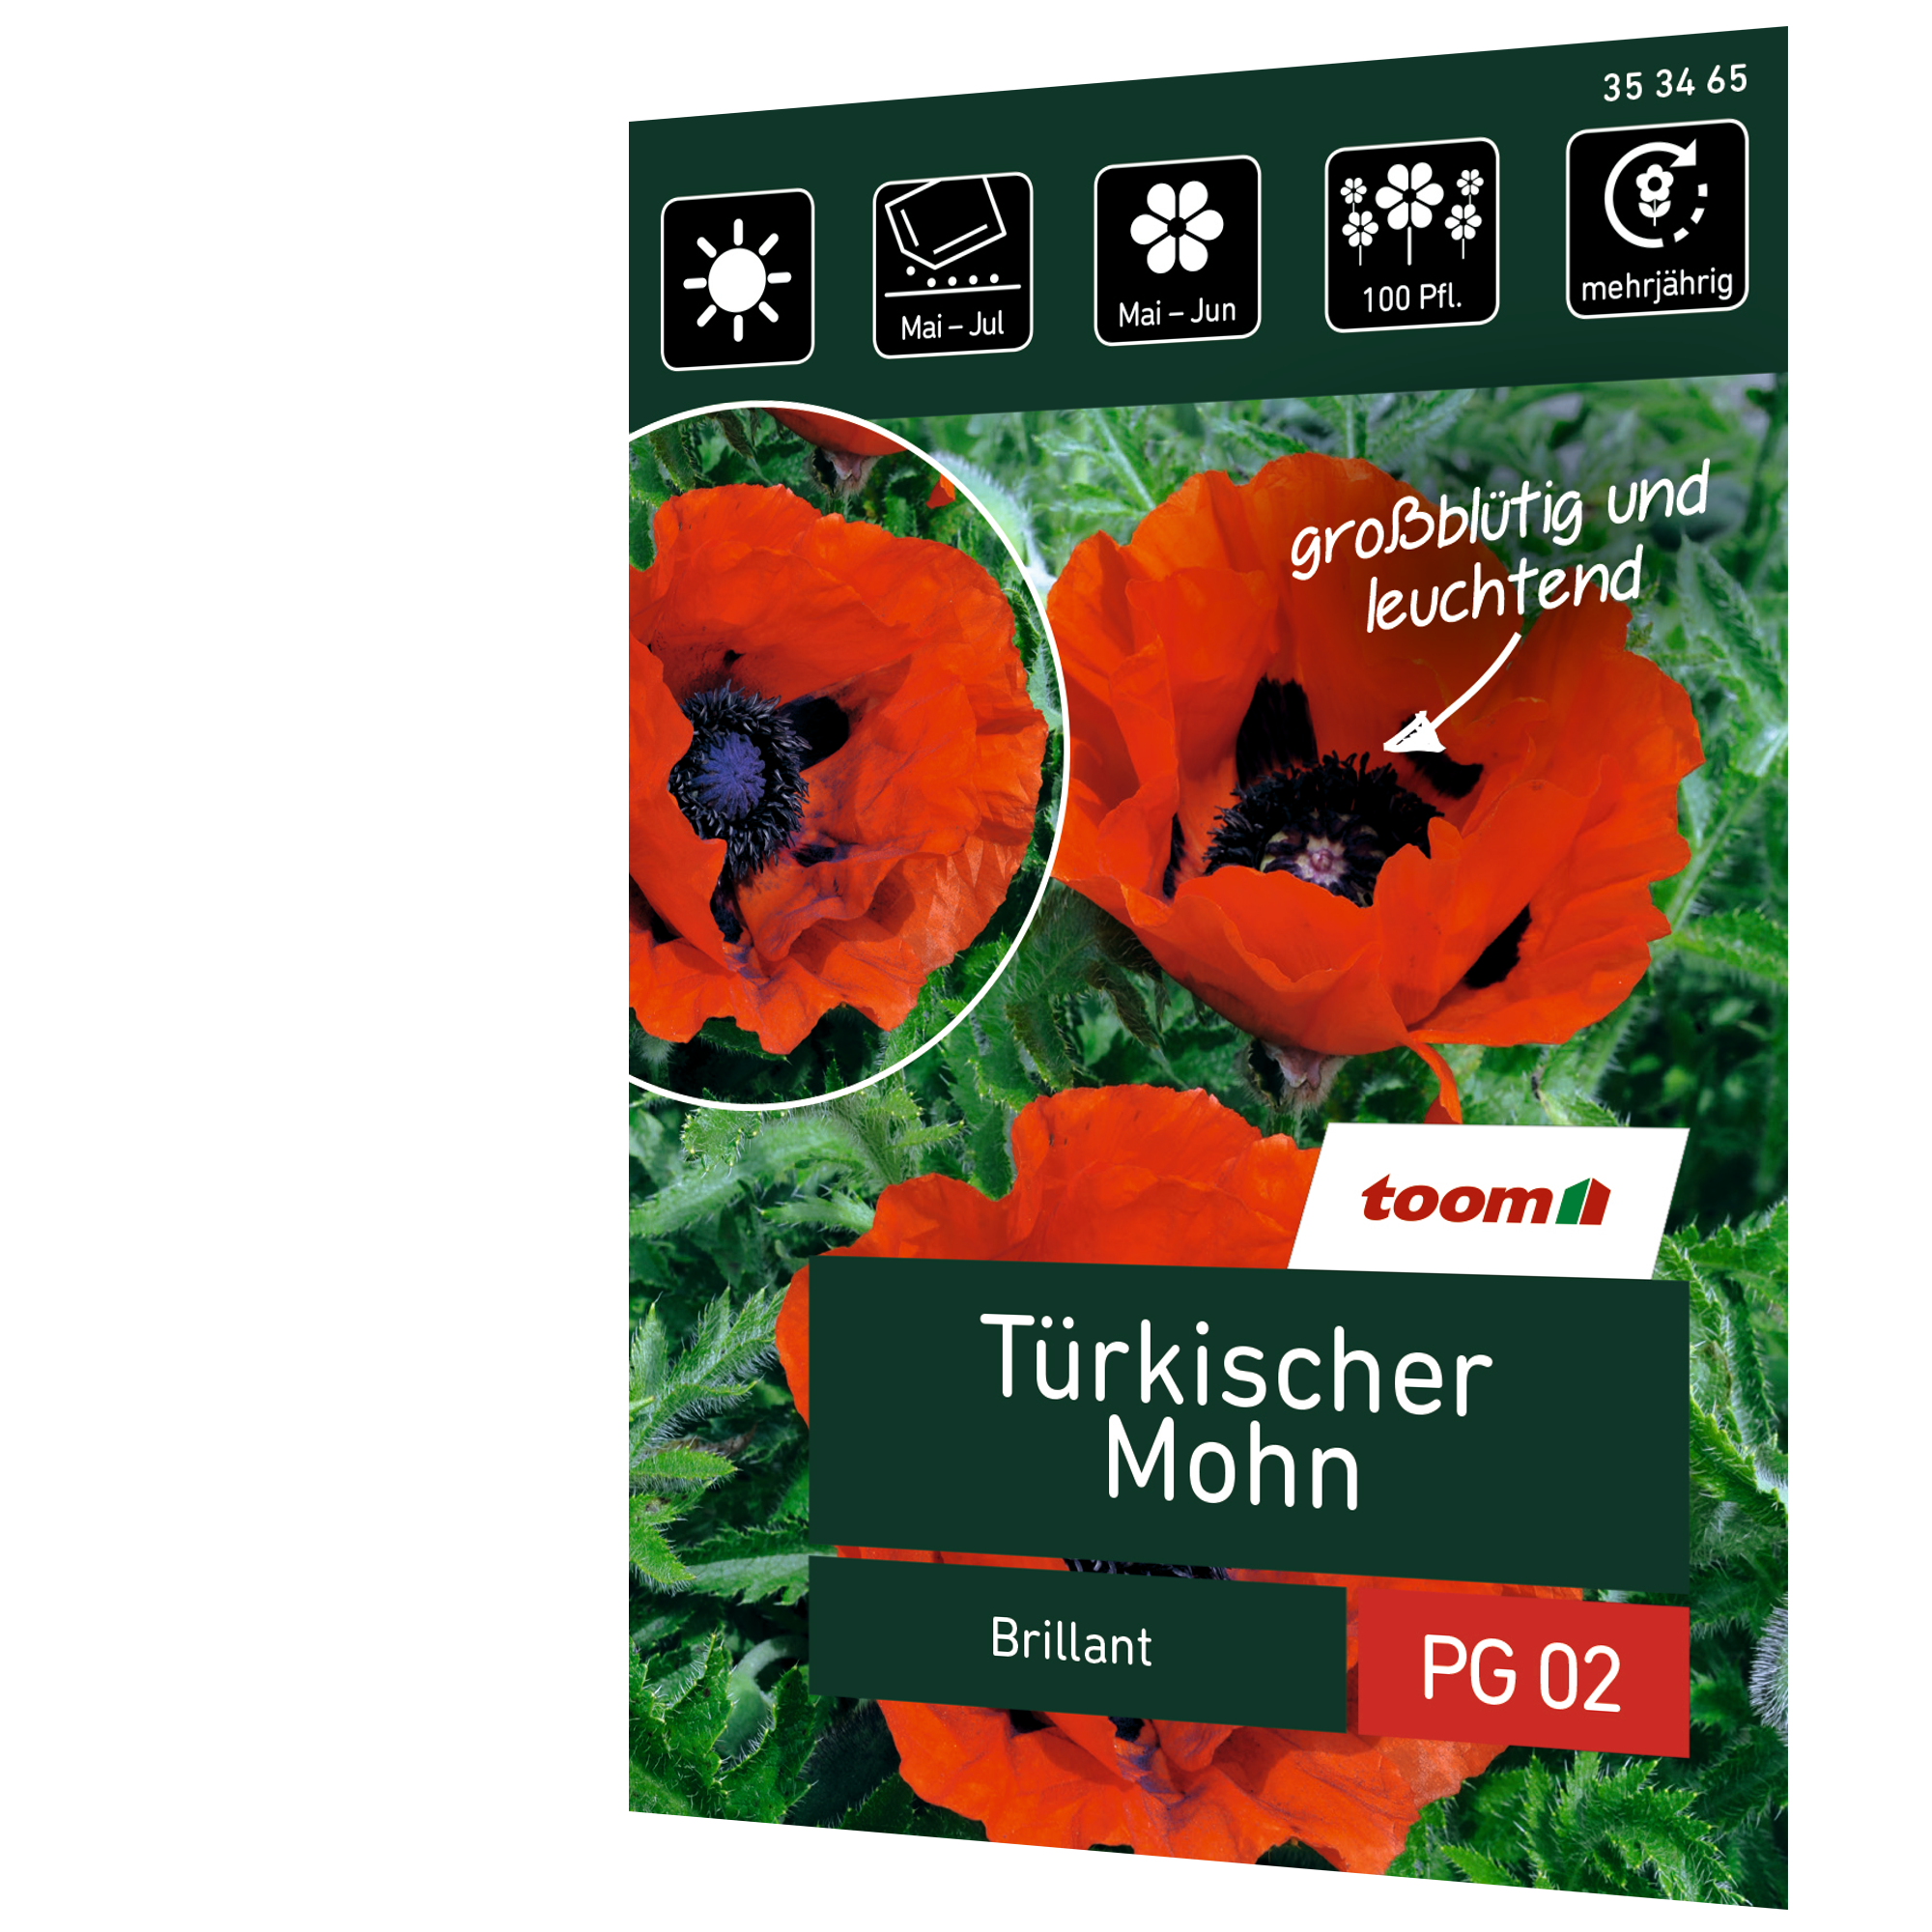 Türkischer Mohn 'Brillant' + product picture